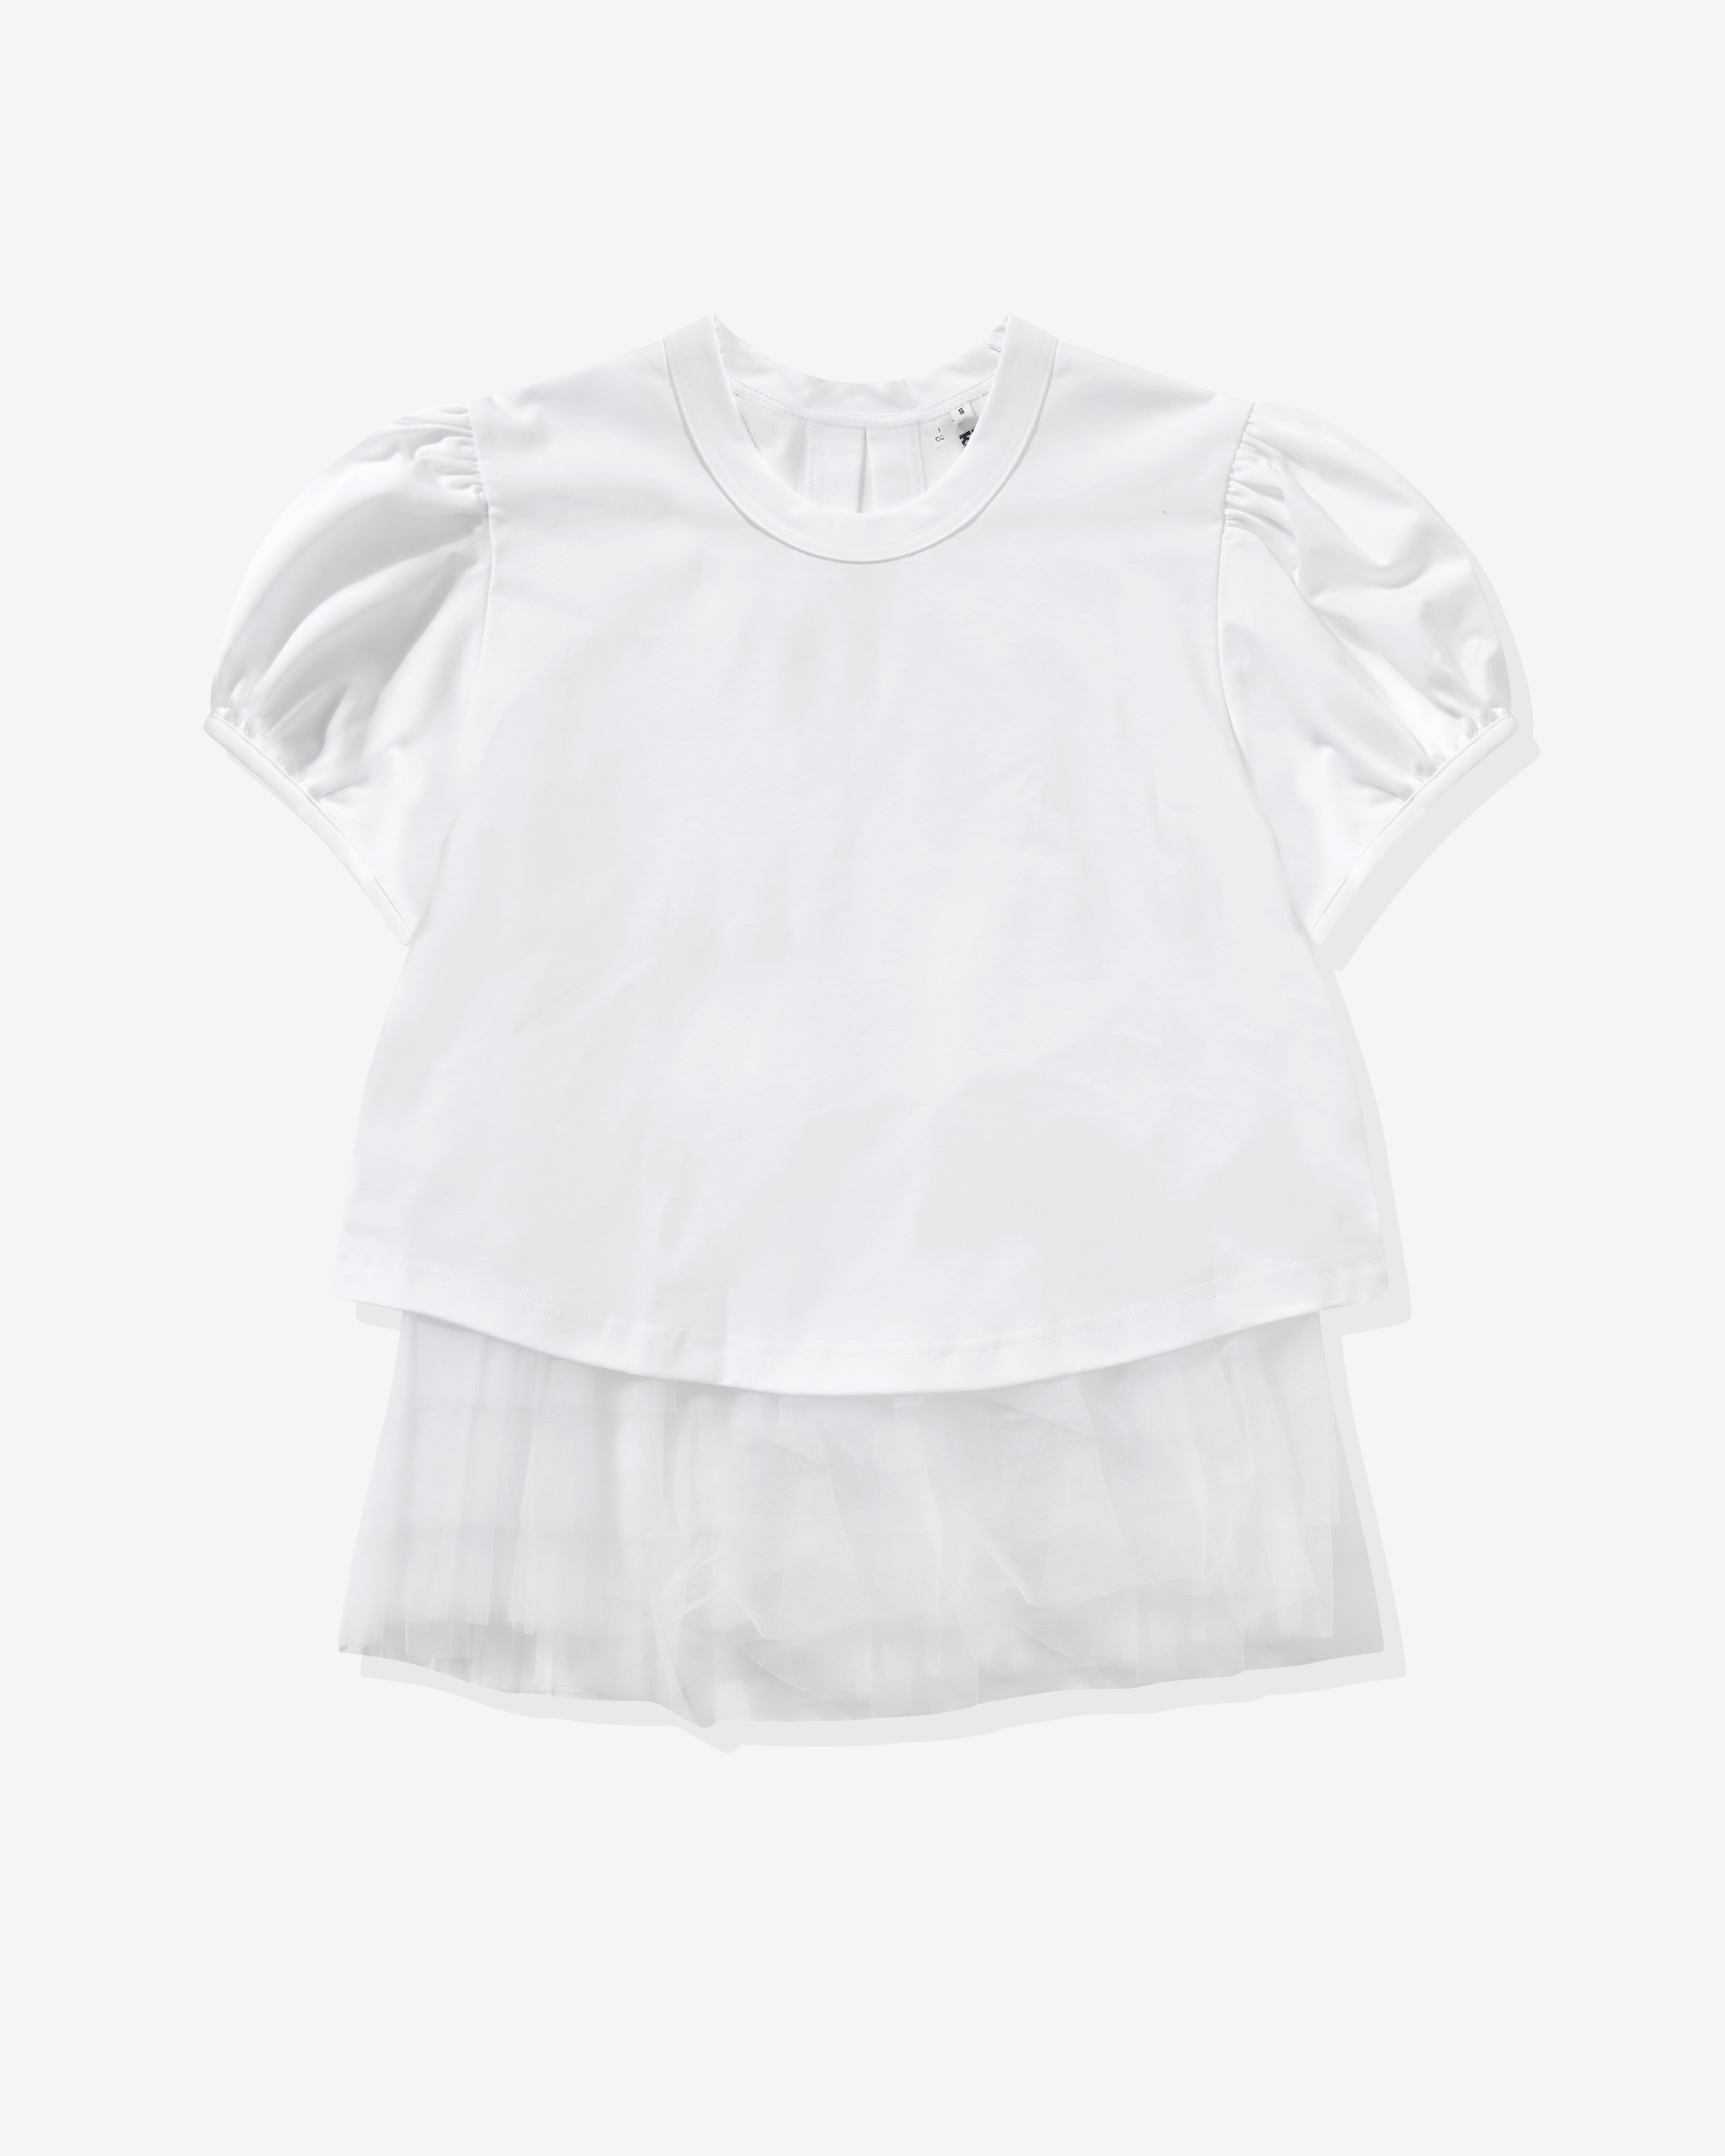 Noir Kei Ninomiya - Women's Tulle Layered T-Shirt - (White)